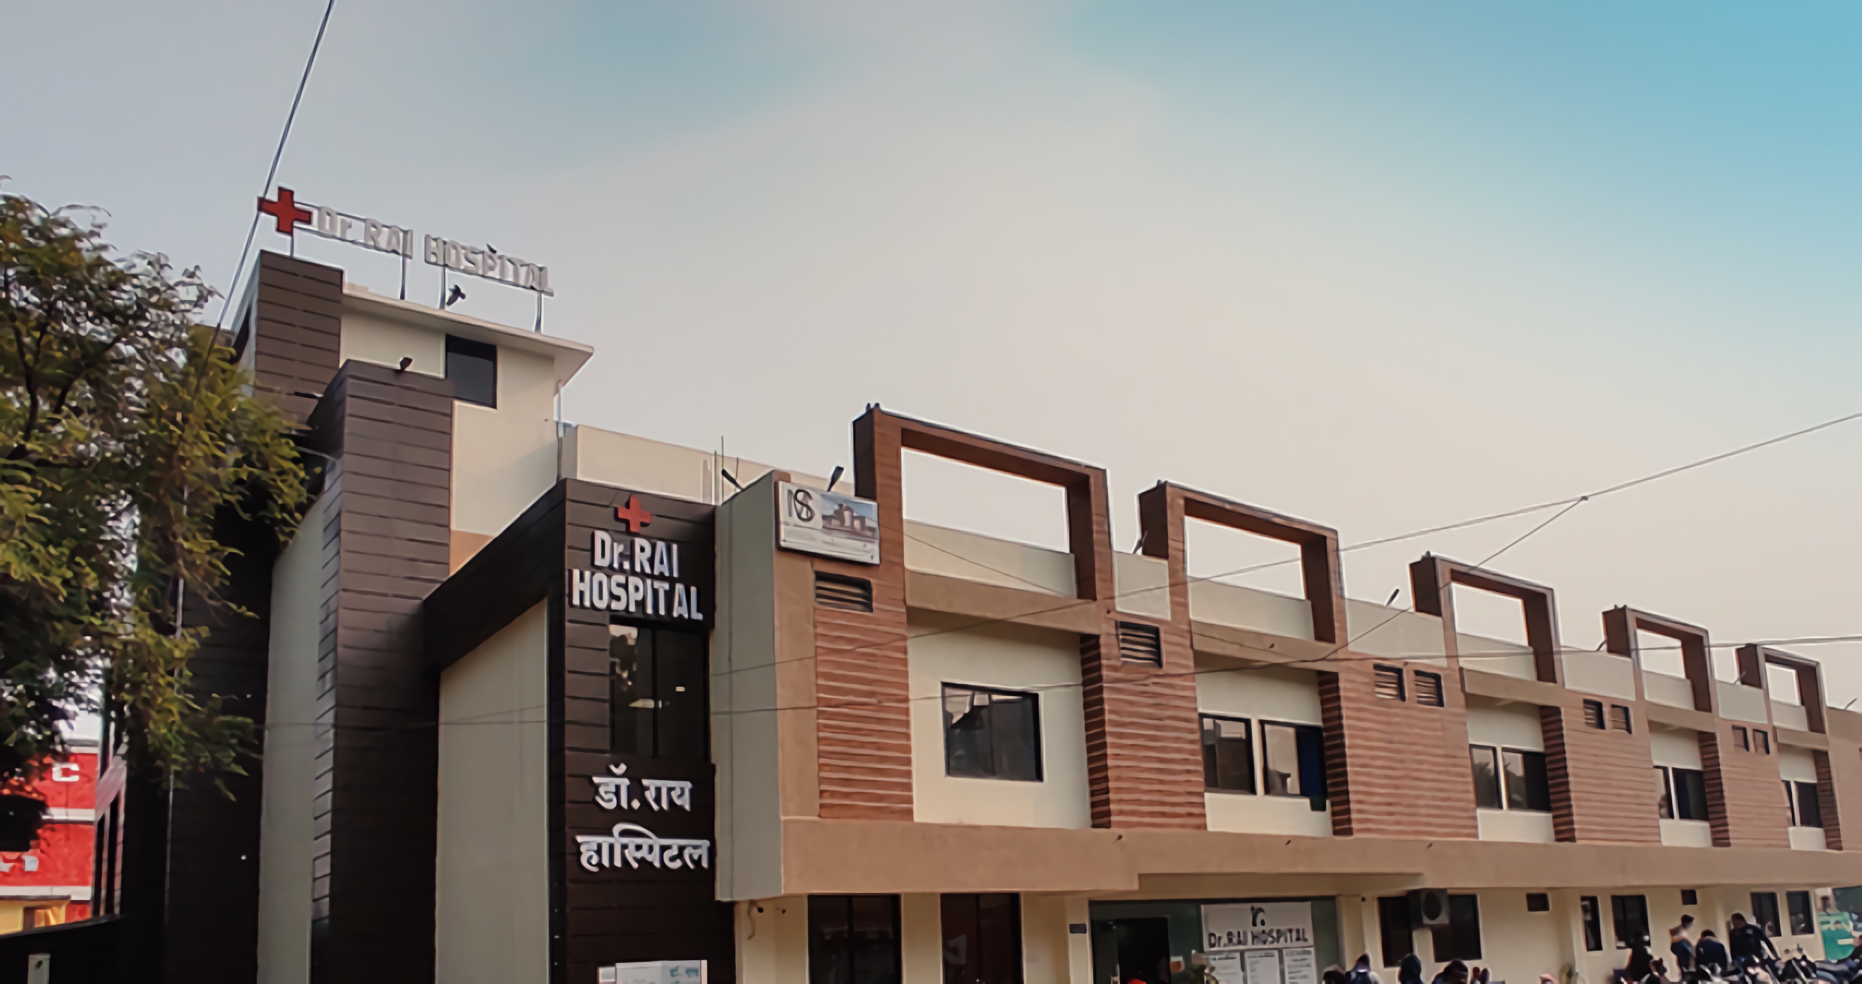 Real Cash - Sagar Hospital